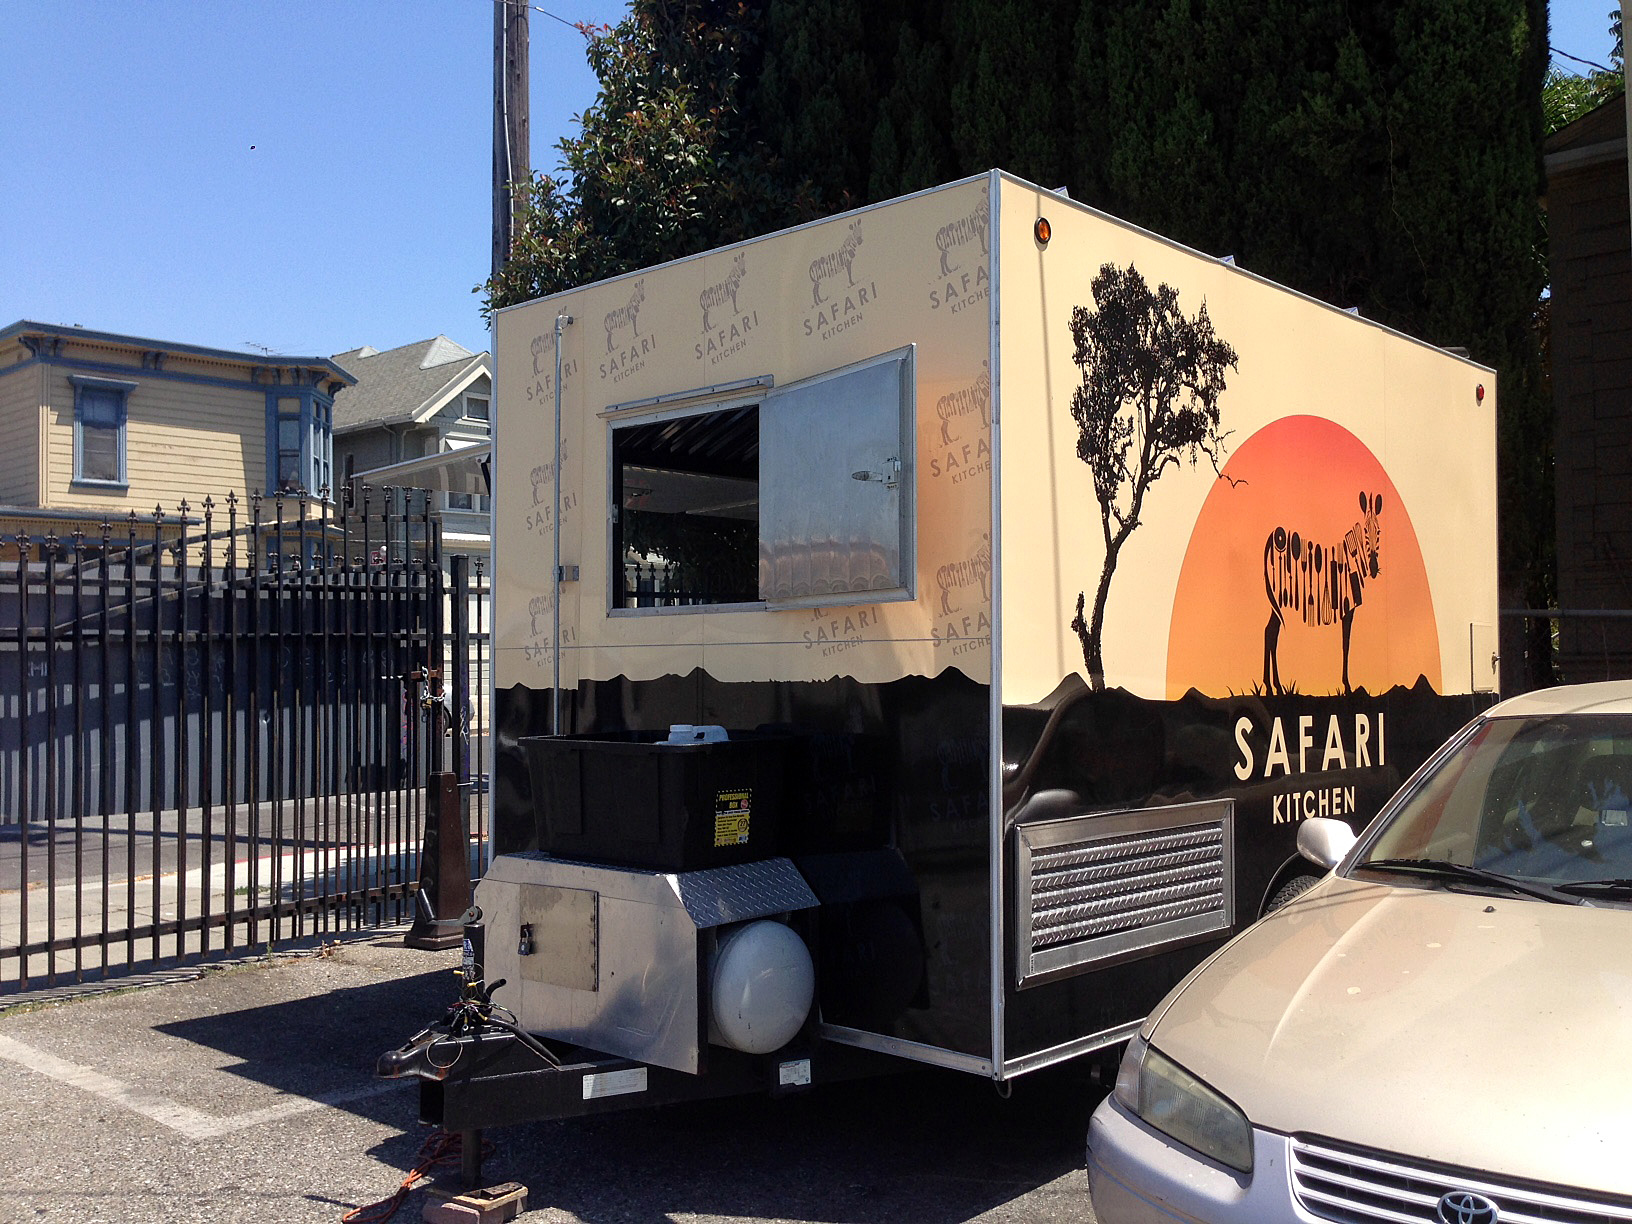 Somali food trailer that houses Safari kitchen.